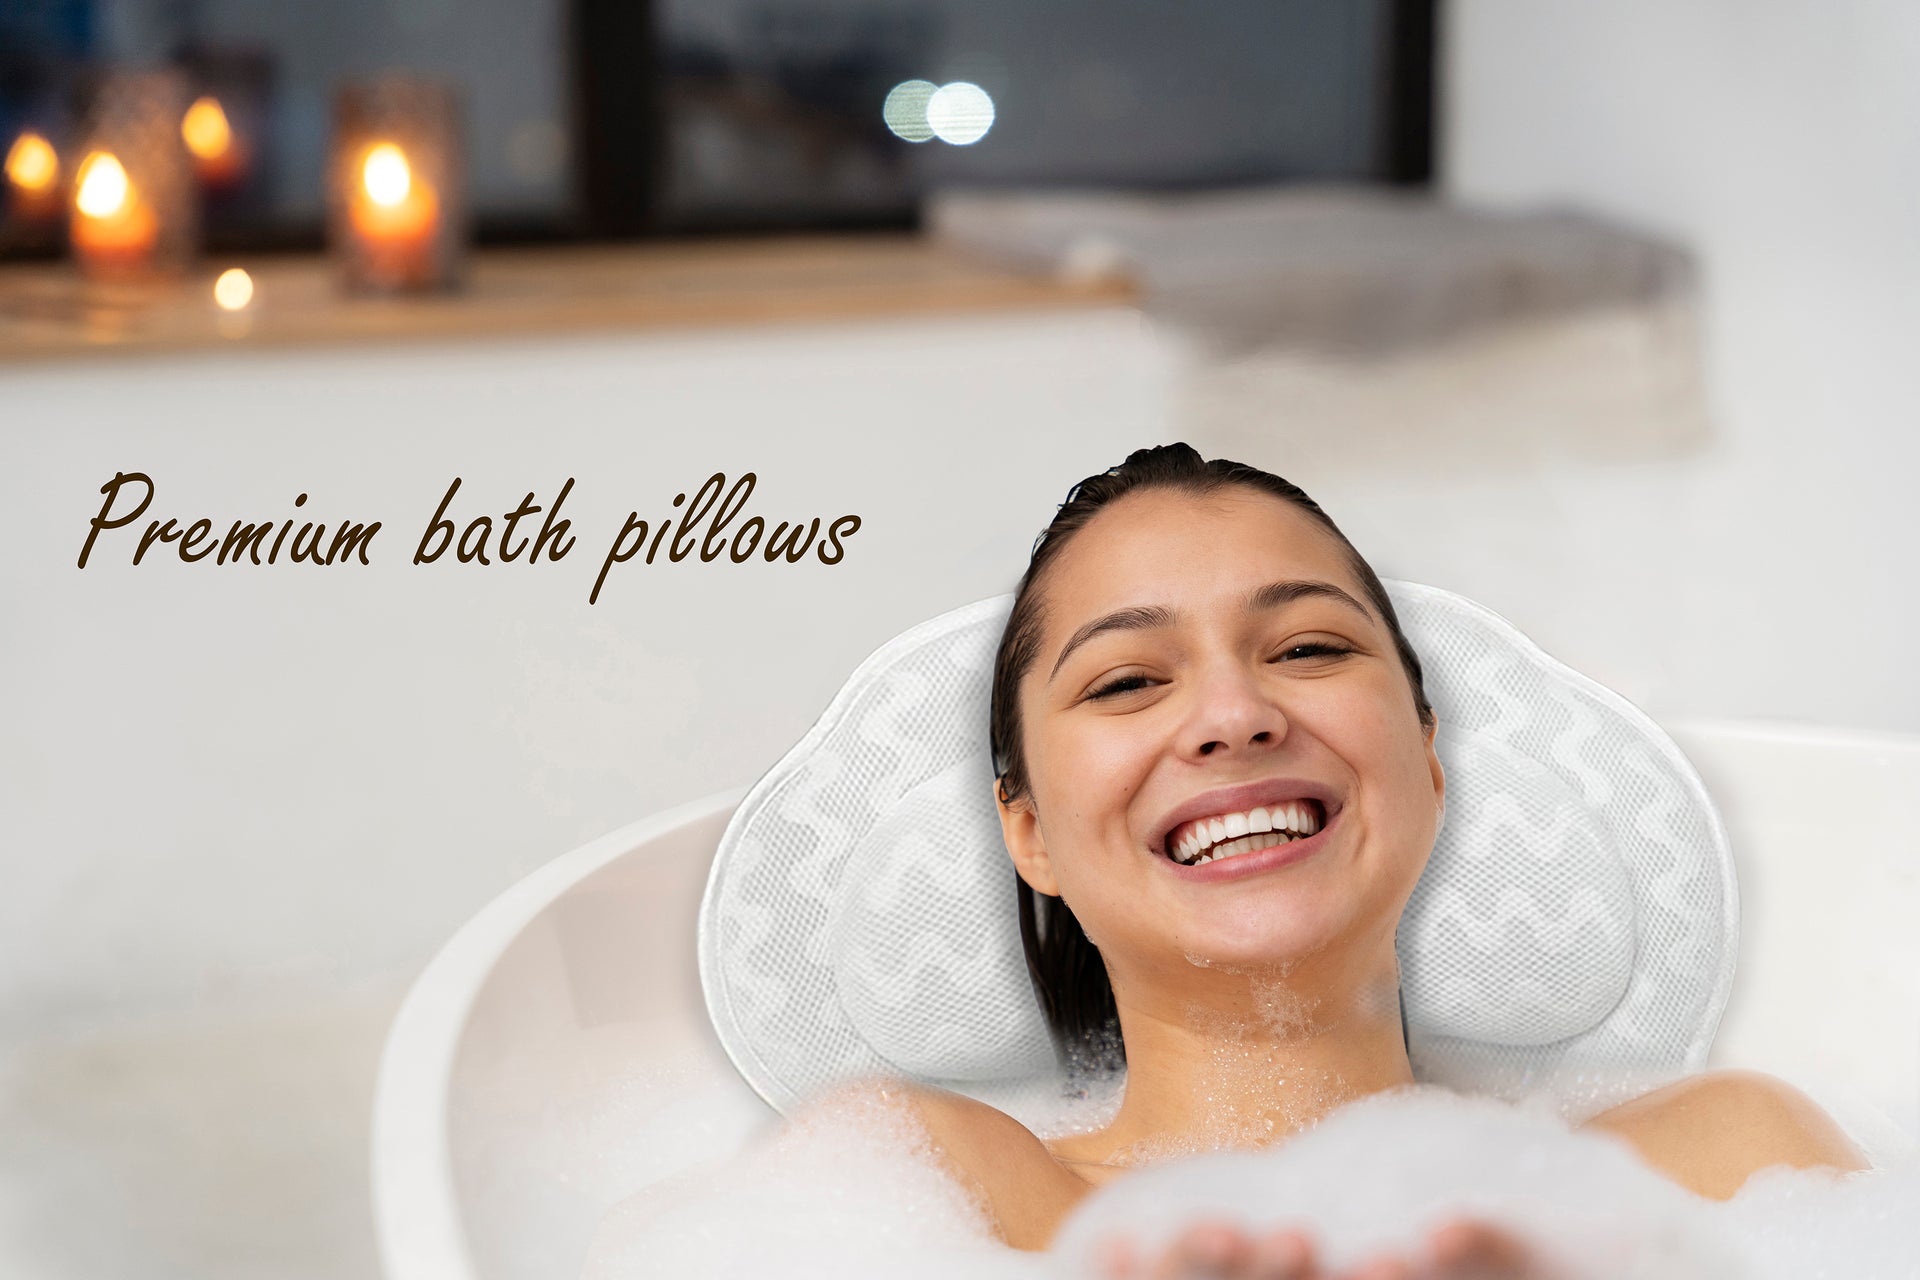 The Head Floater™ Luxury Bath Pillow